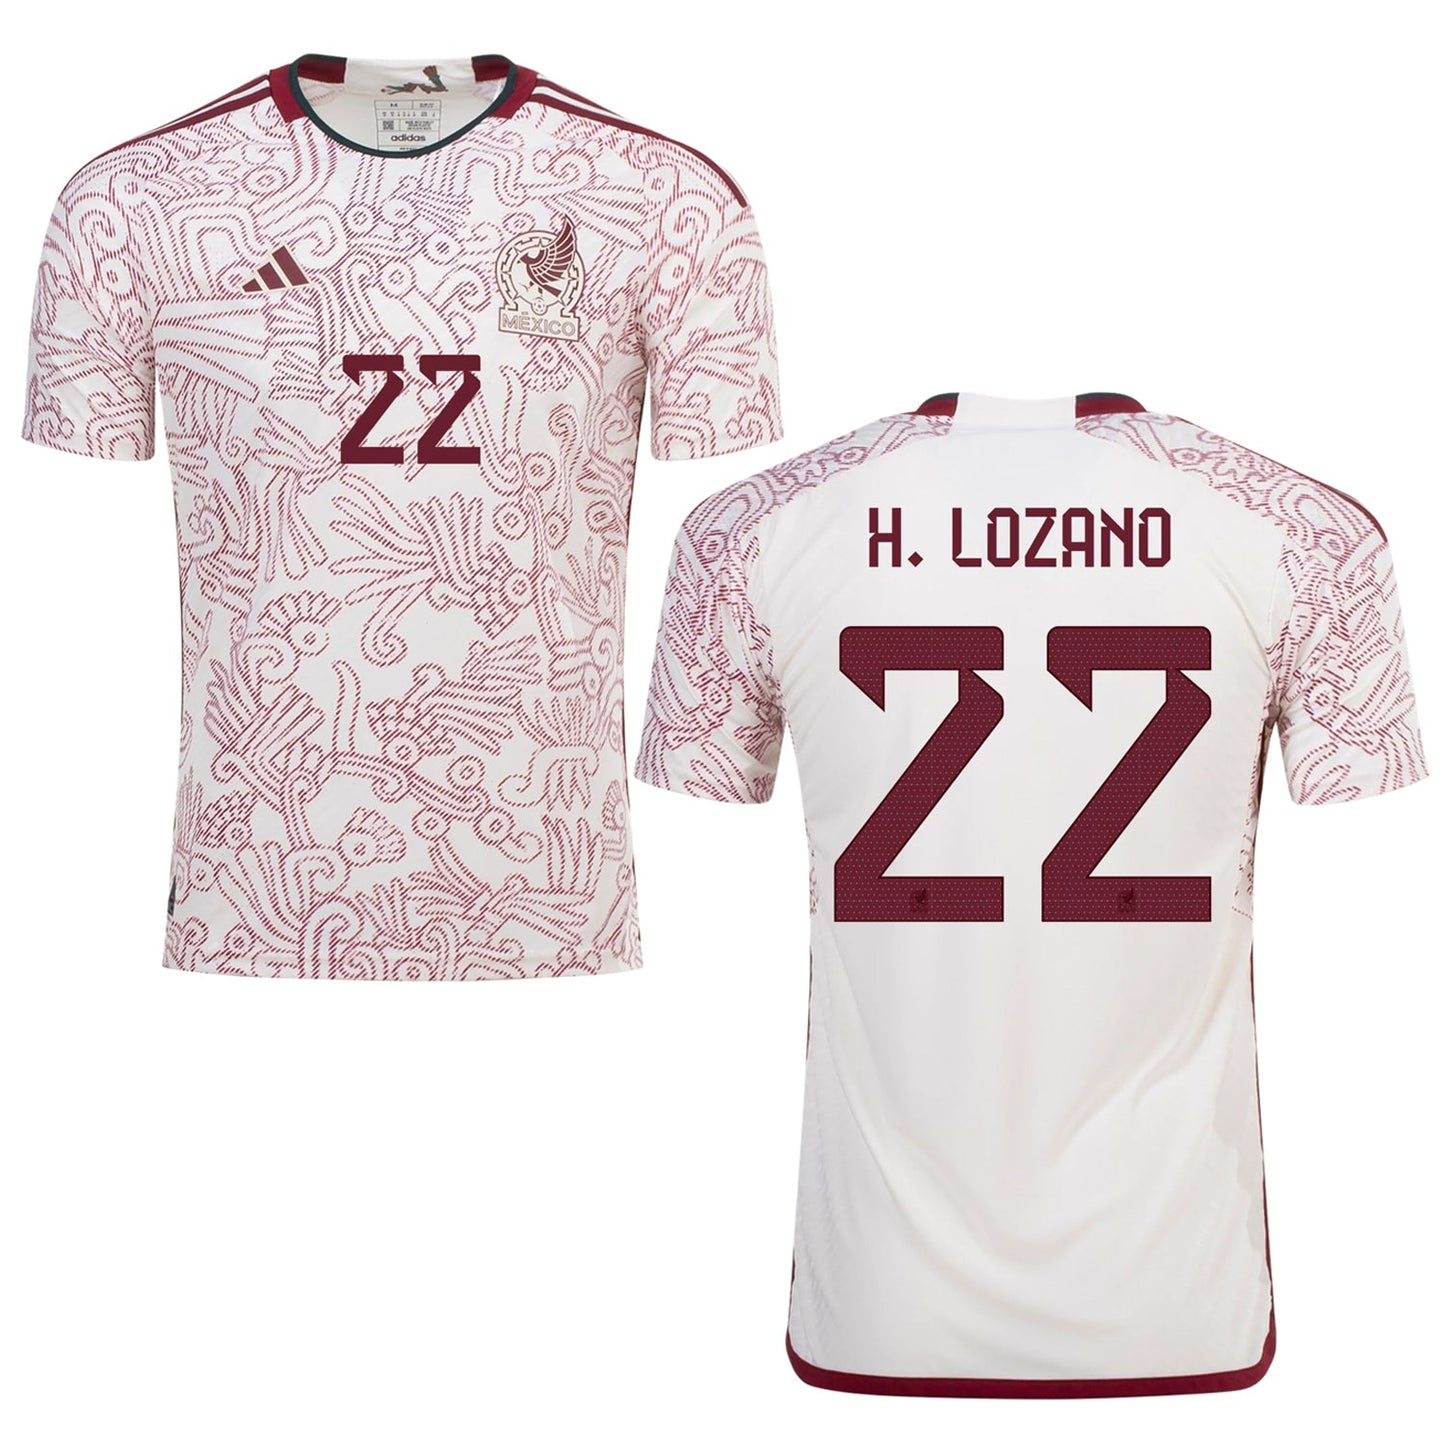 Hirving Lozano Mexico 22 FIFA World Cup Jersey